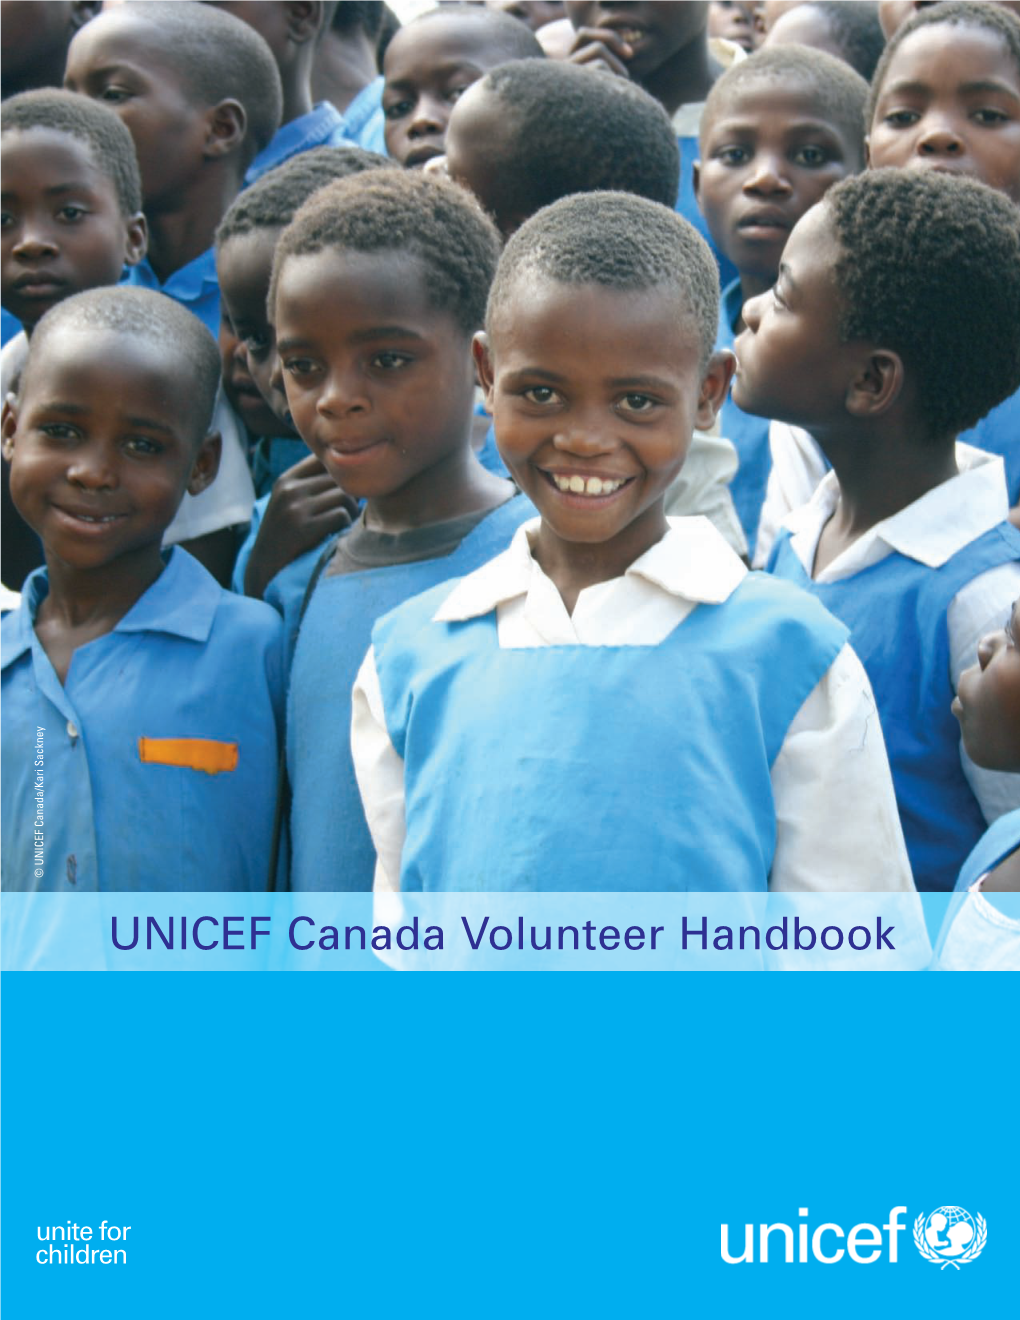 UNICEF Canada Volunteer Handbook